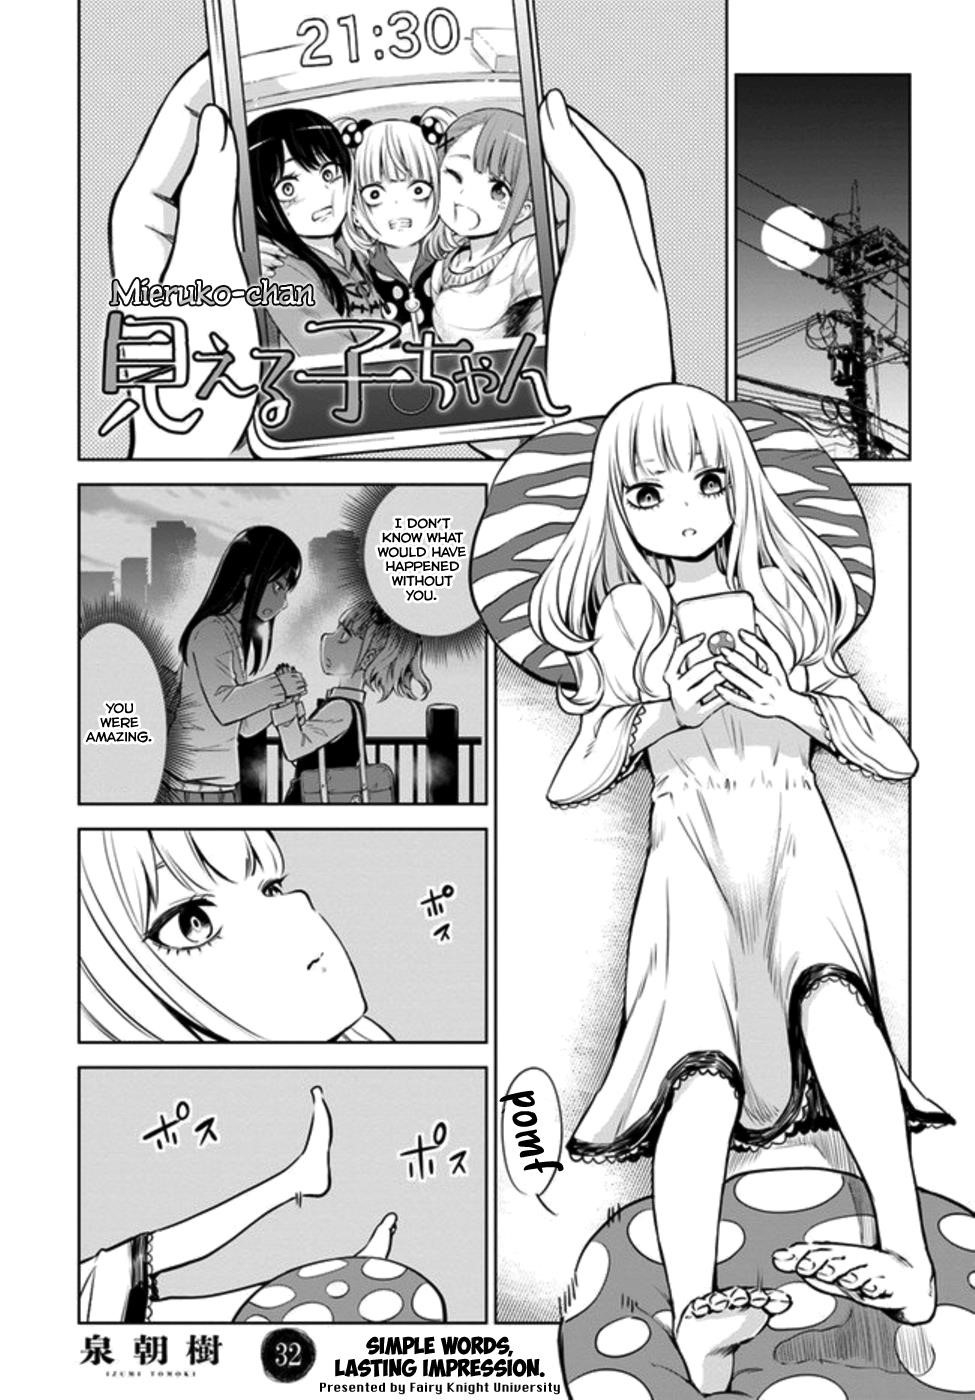 Read Manga The Girl Who Sees Them Chapter 32 Read Manga Online Manga Catalog 1